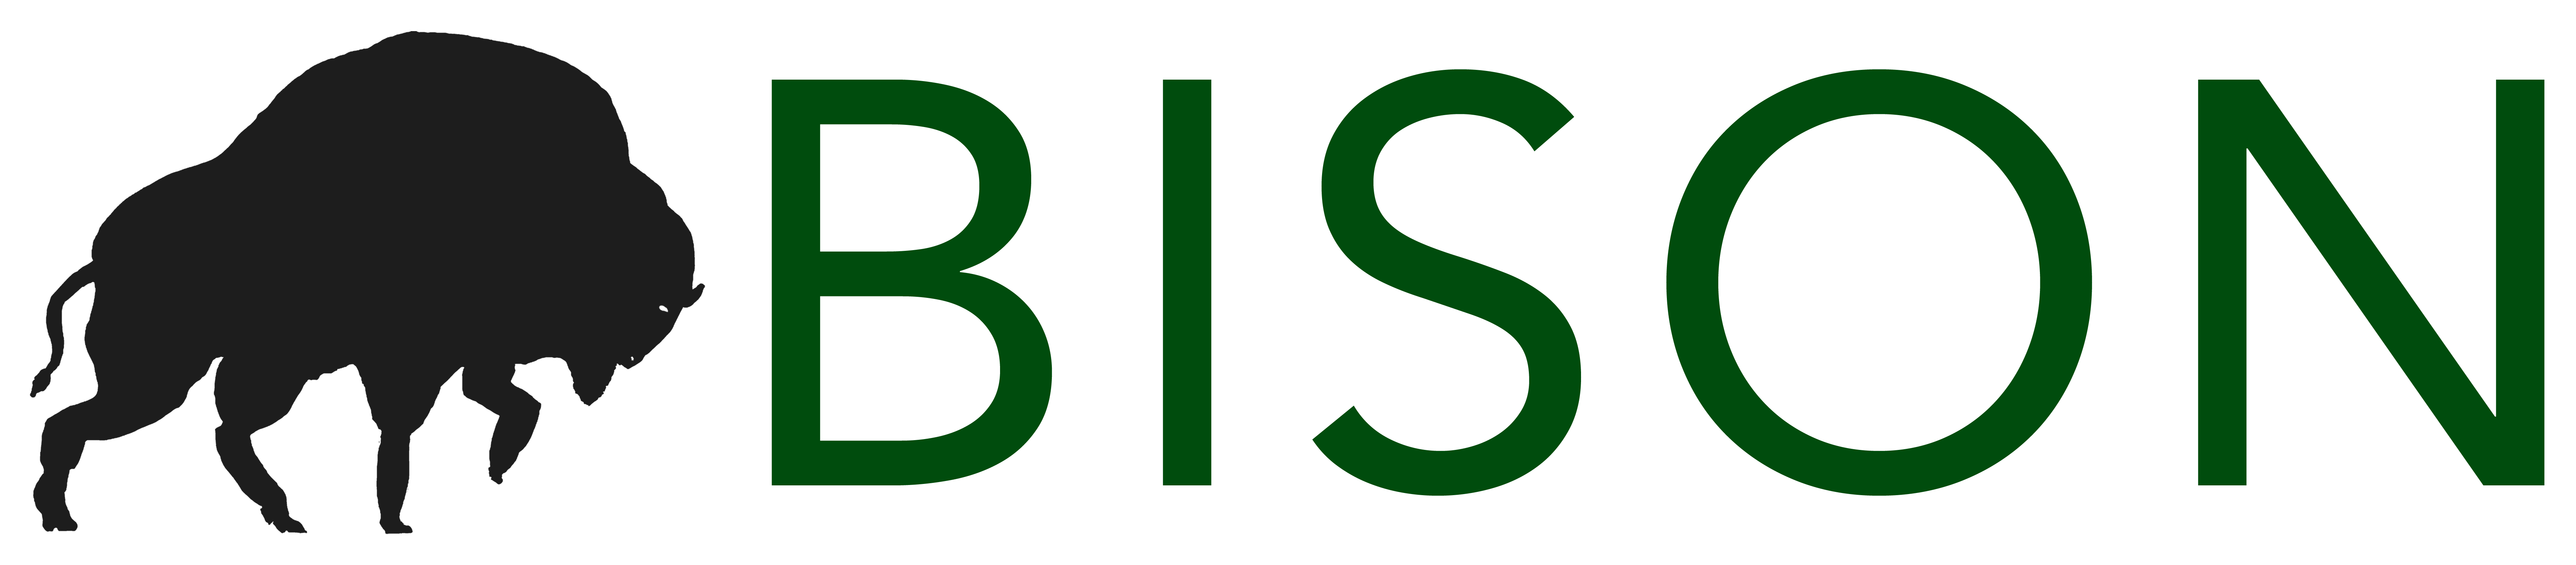 Bison Logo Graphic PNG